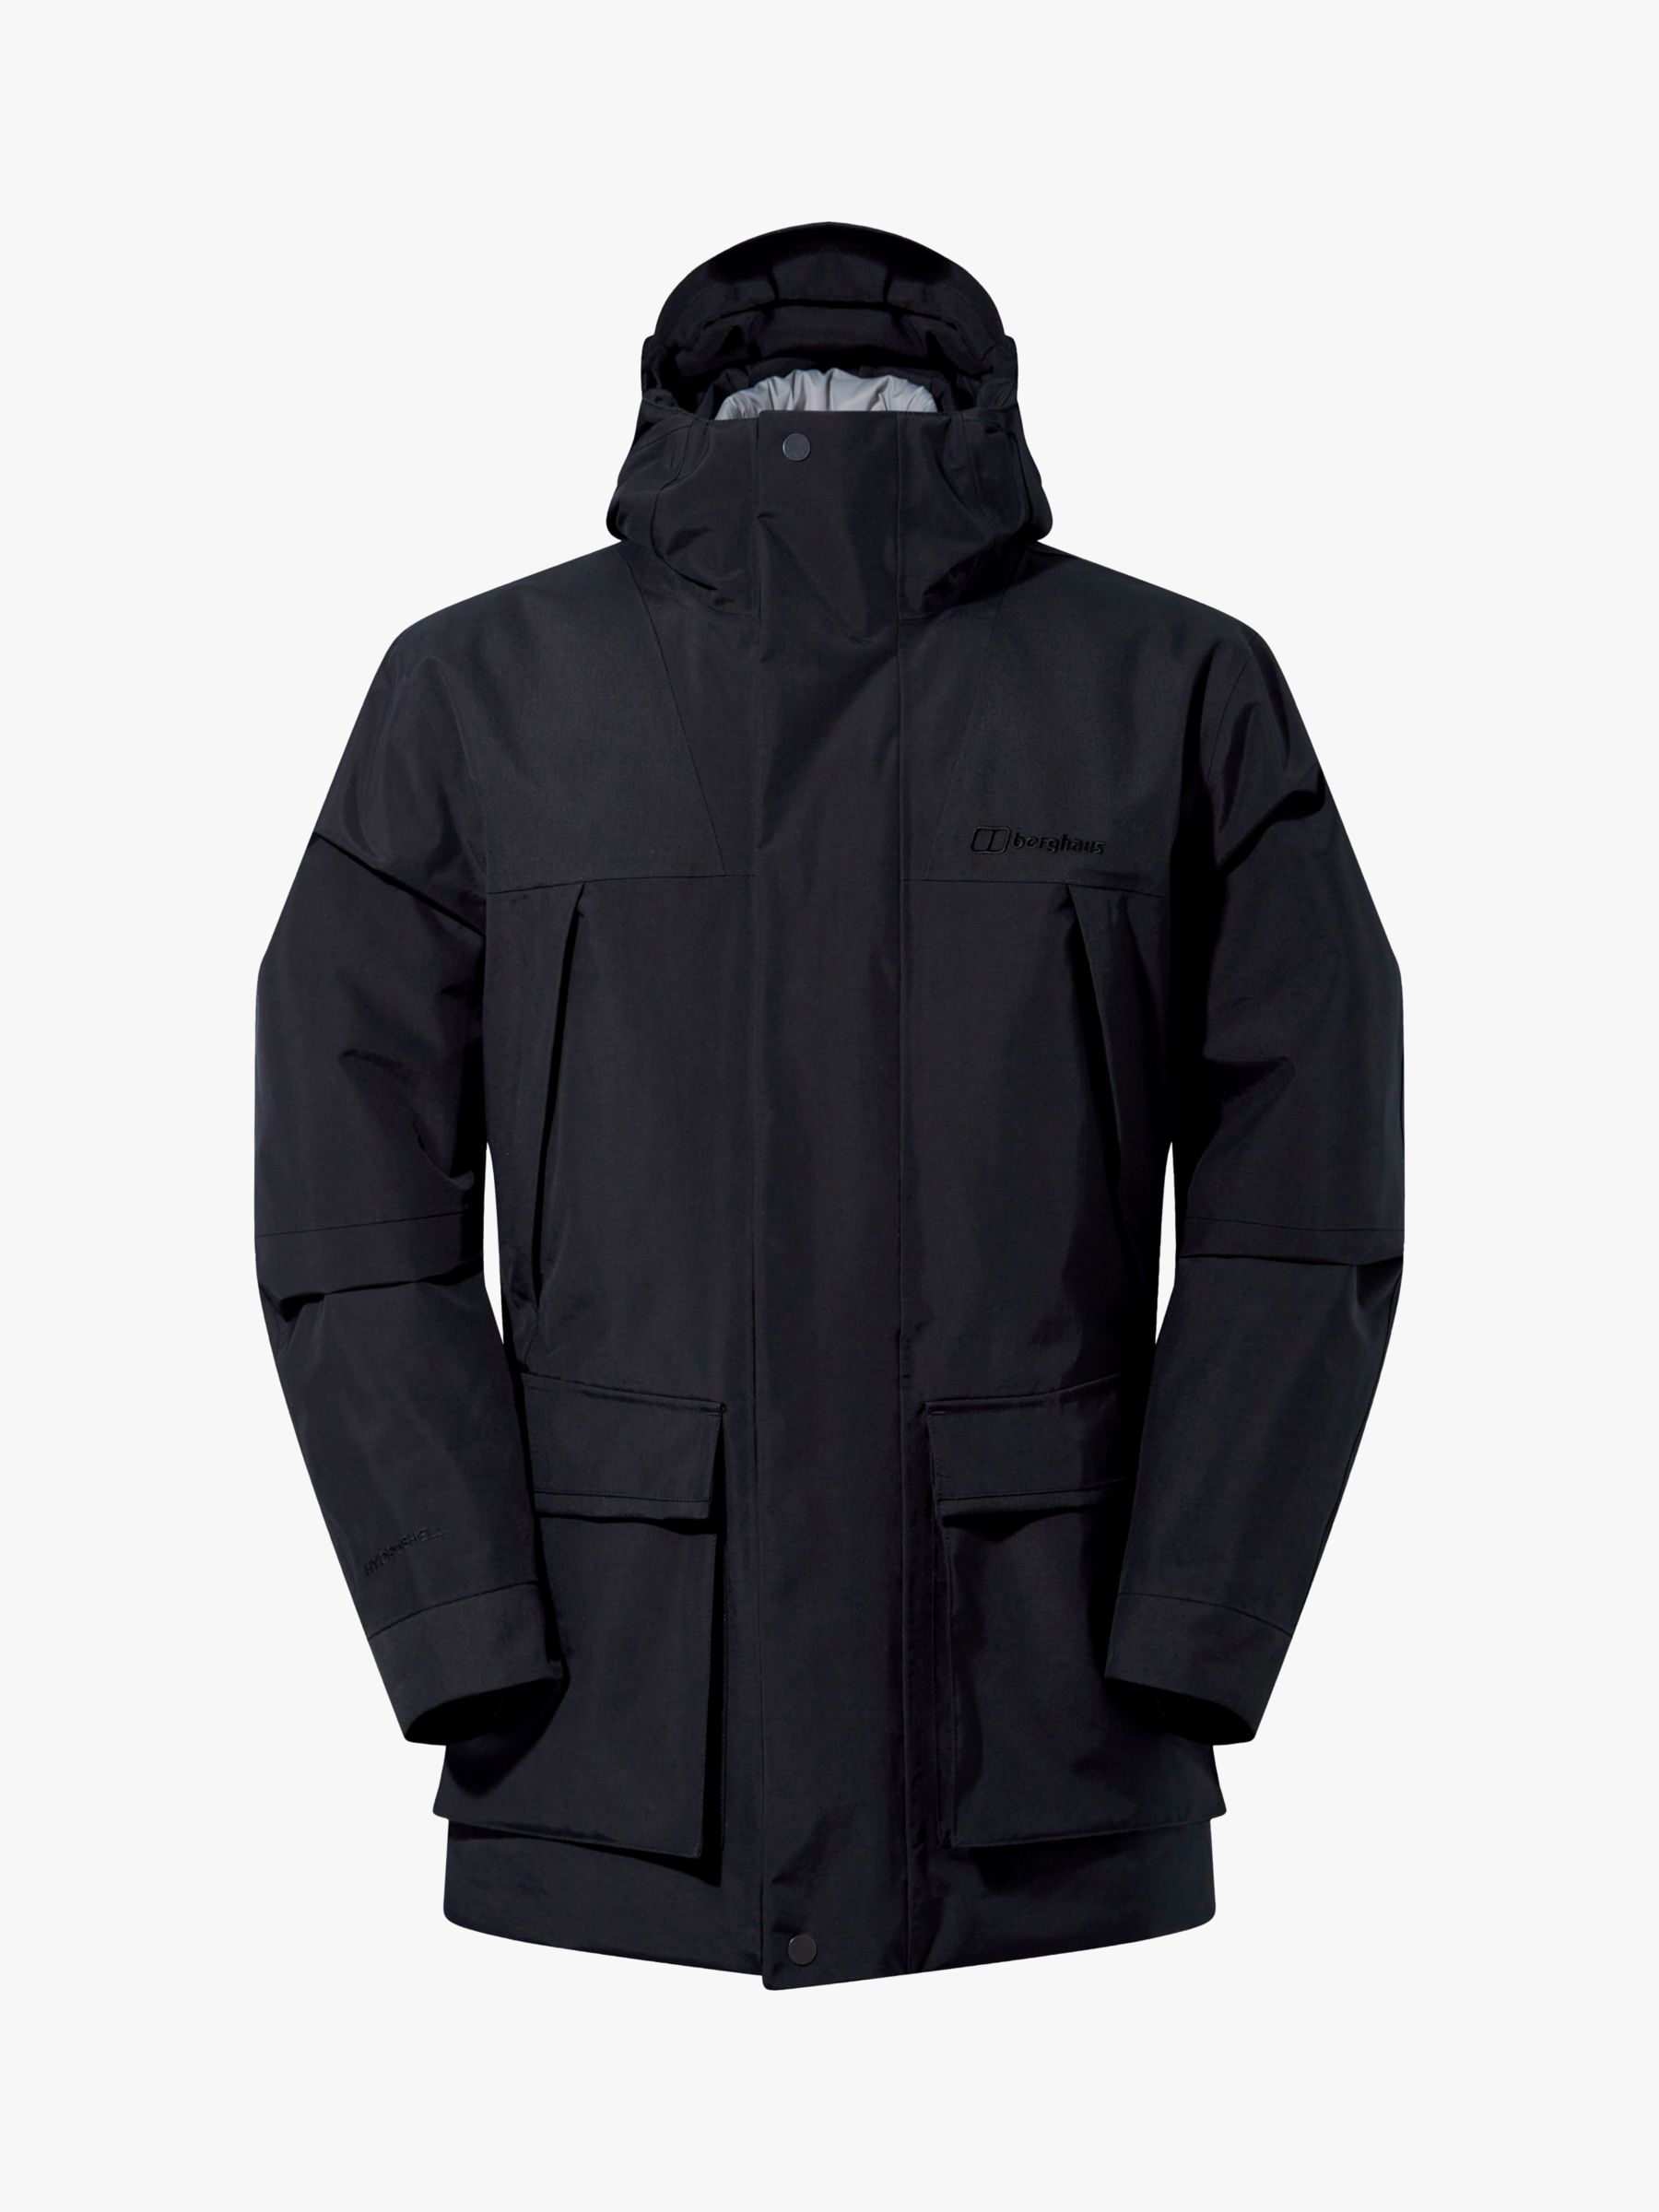 Berghaus Breccan Insulated Waterproof Parka Men's Jacket, Jet Black at ...